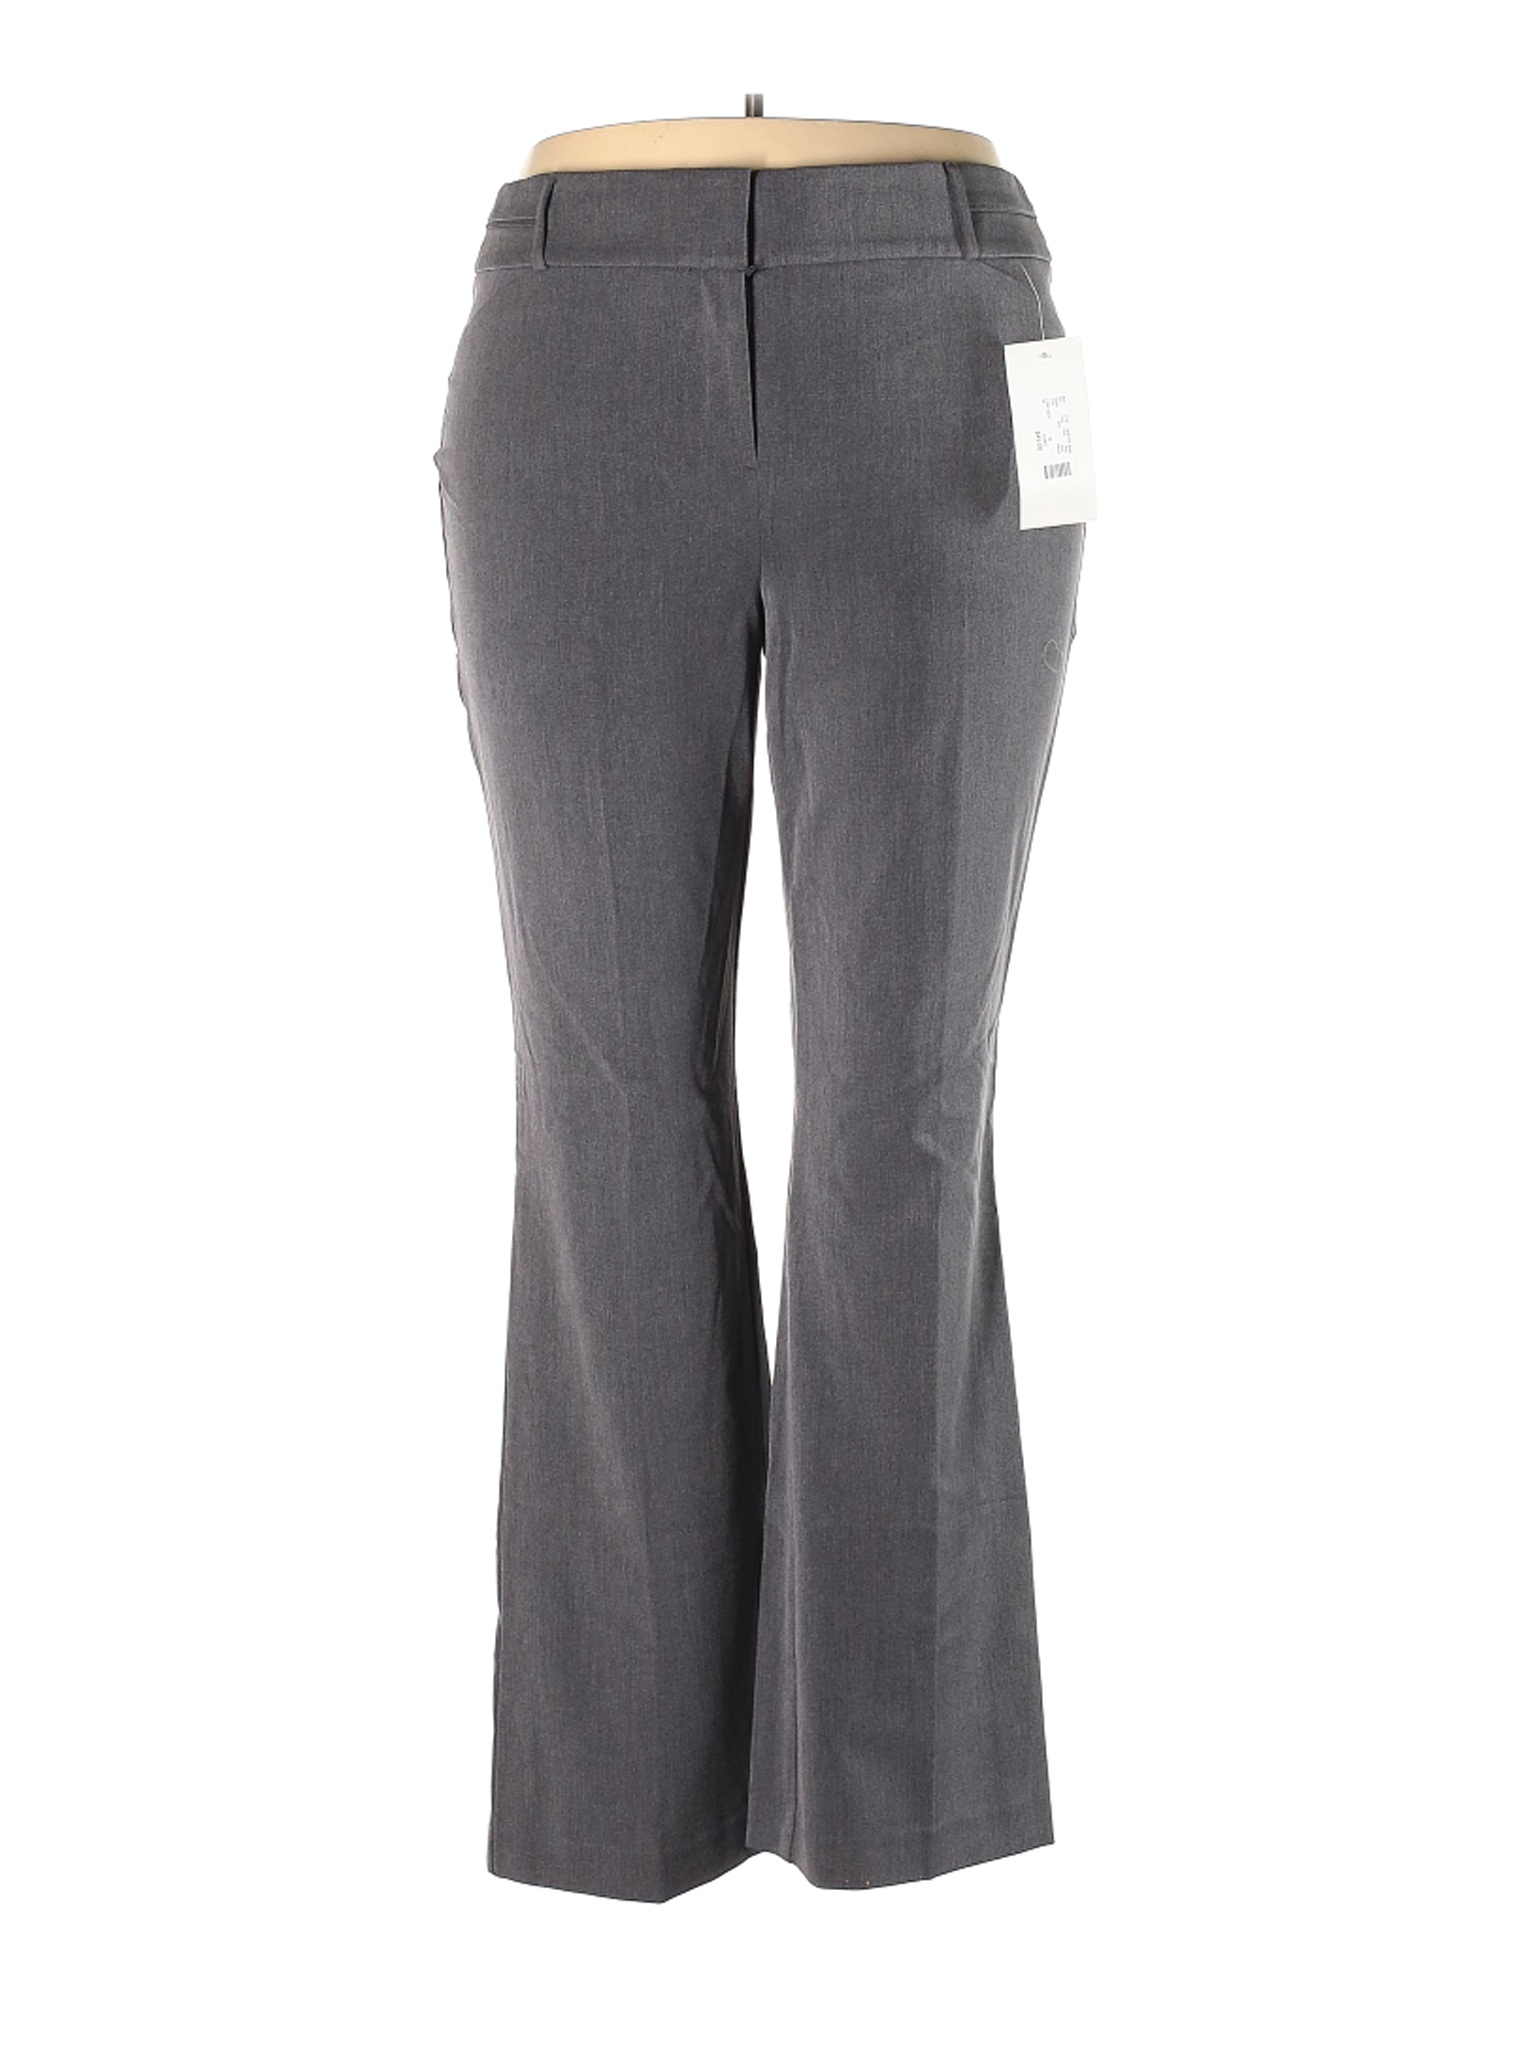 NWT Maurices Women Gray Dress Pants 20 Plus | eBay